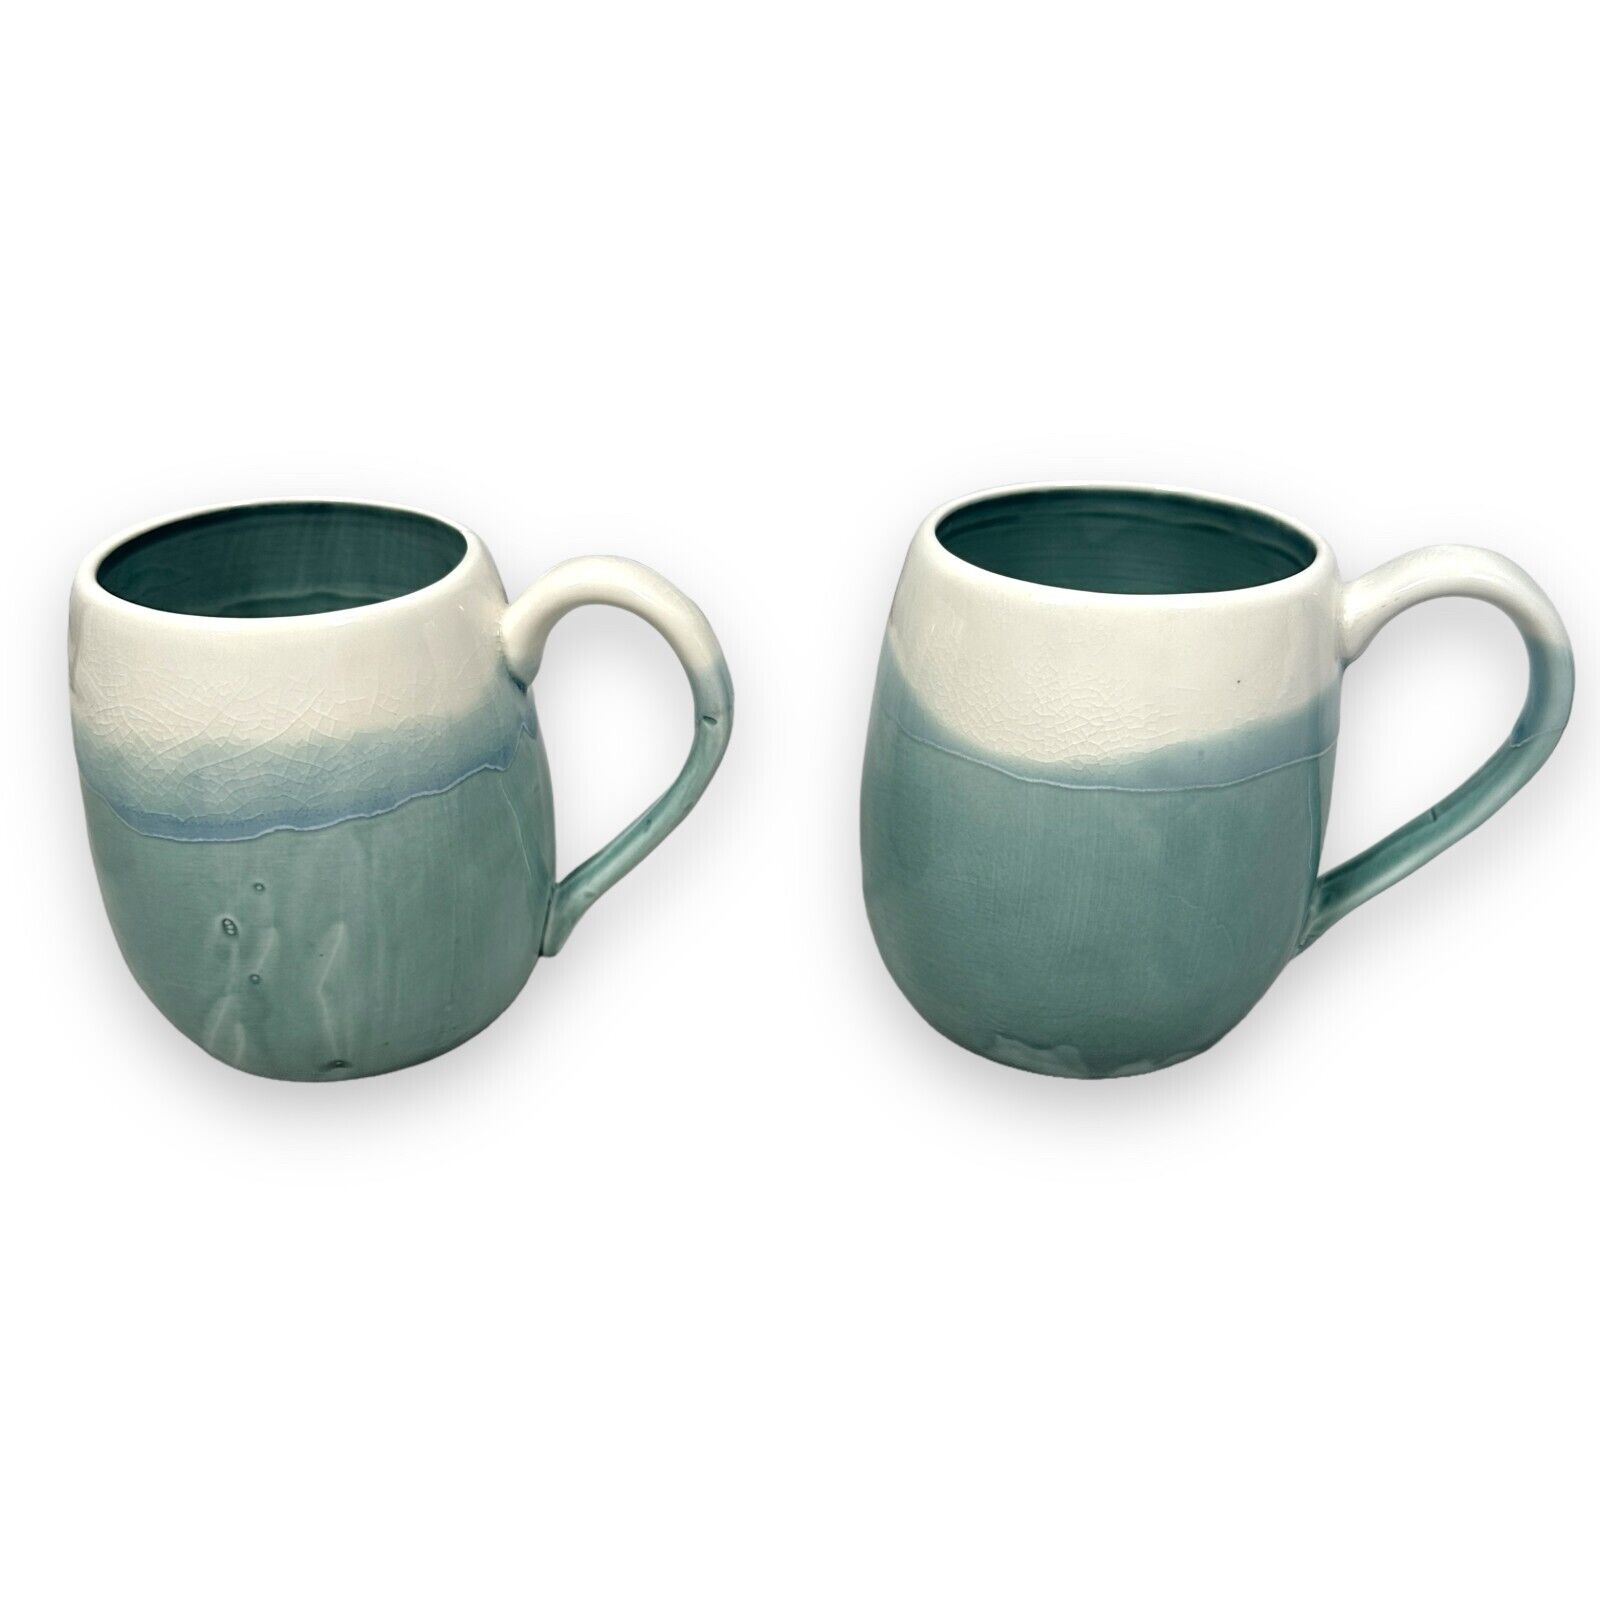 Anthropologie Cabarita Coffee Mug Teal White Earthenware Crackle Glazed Lot of 2